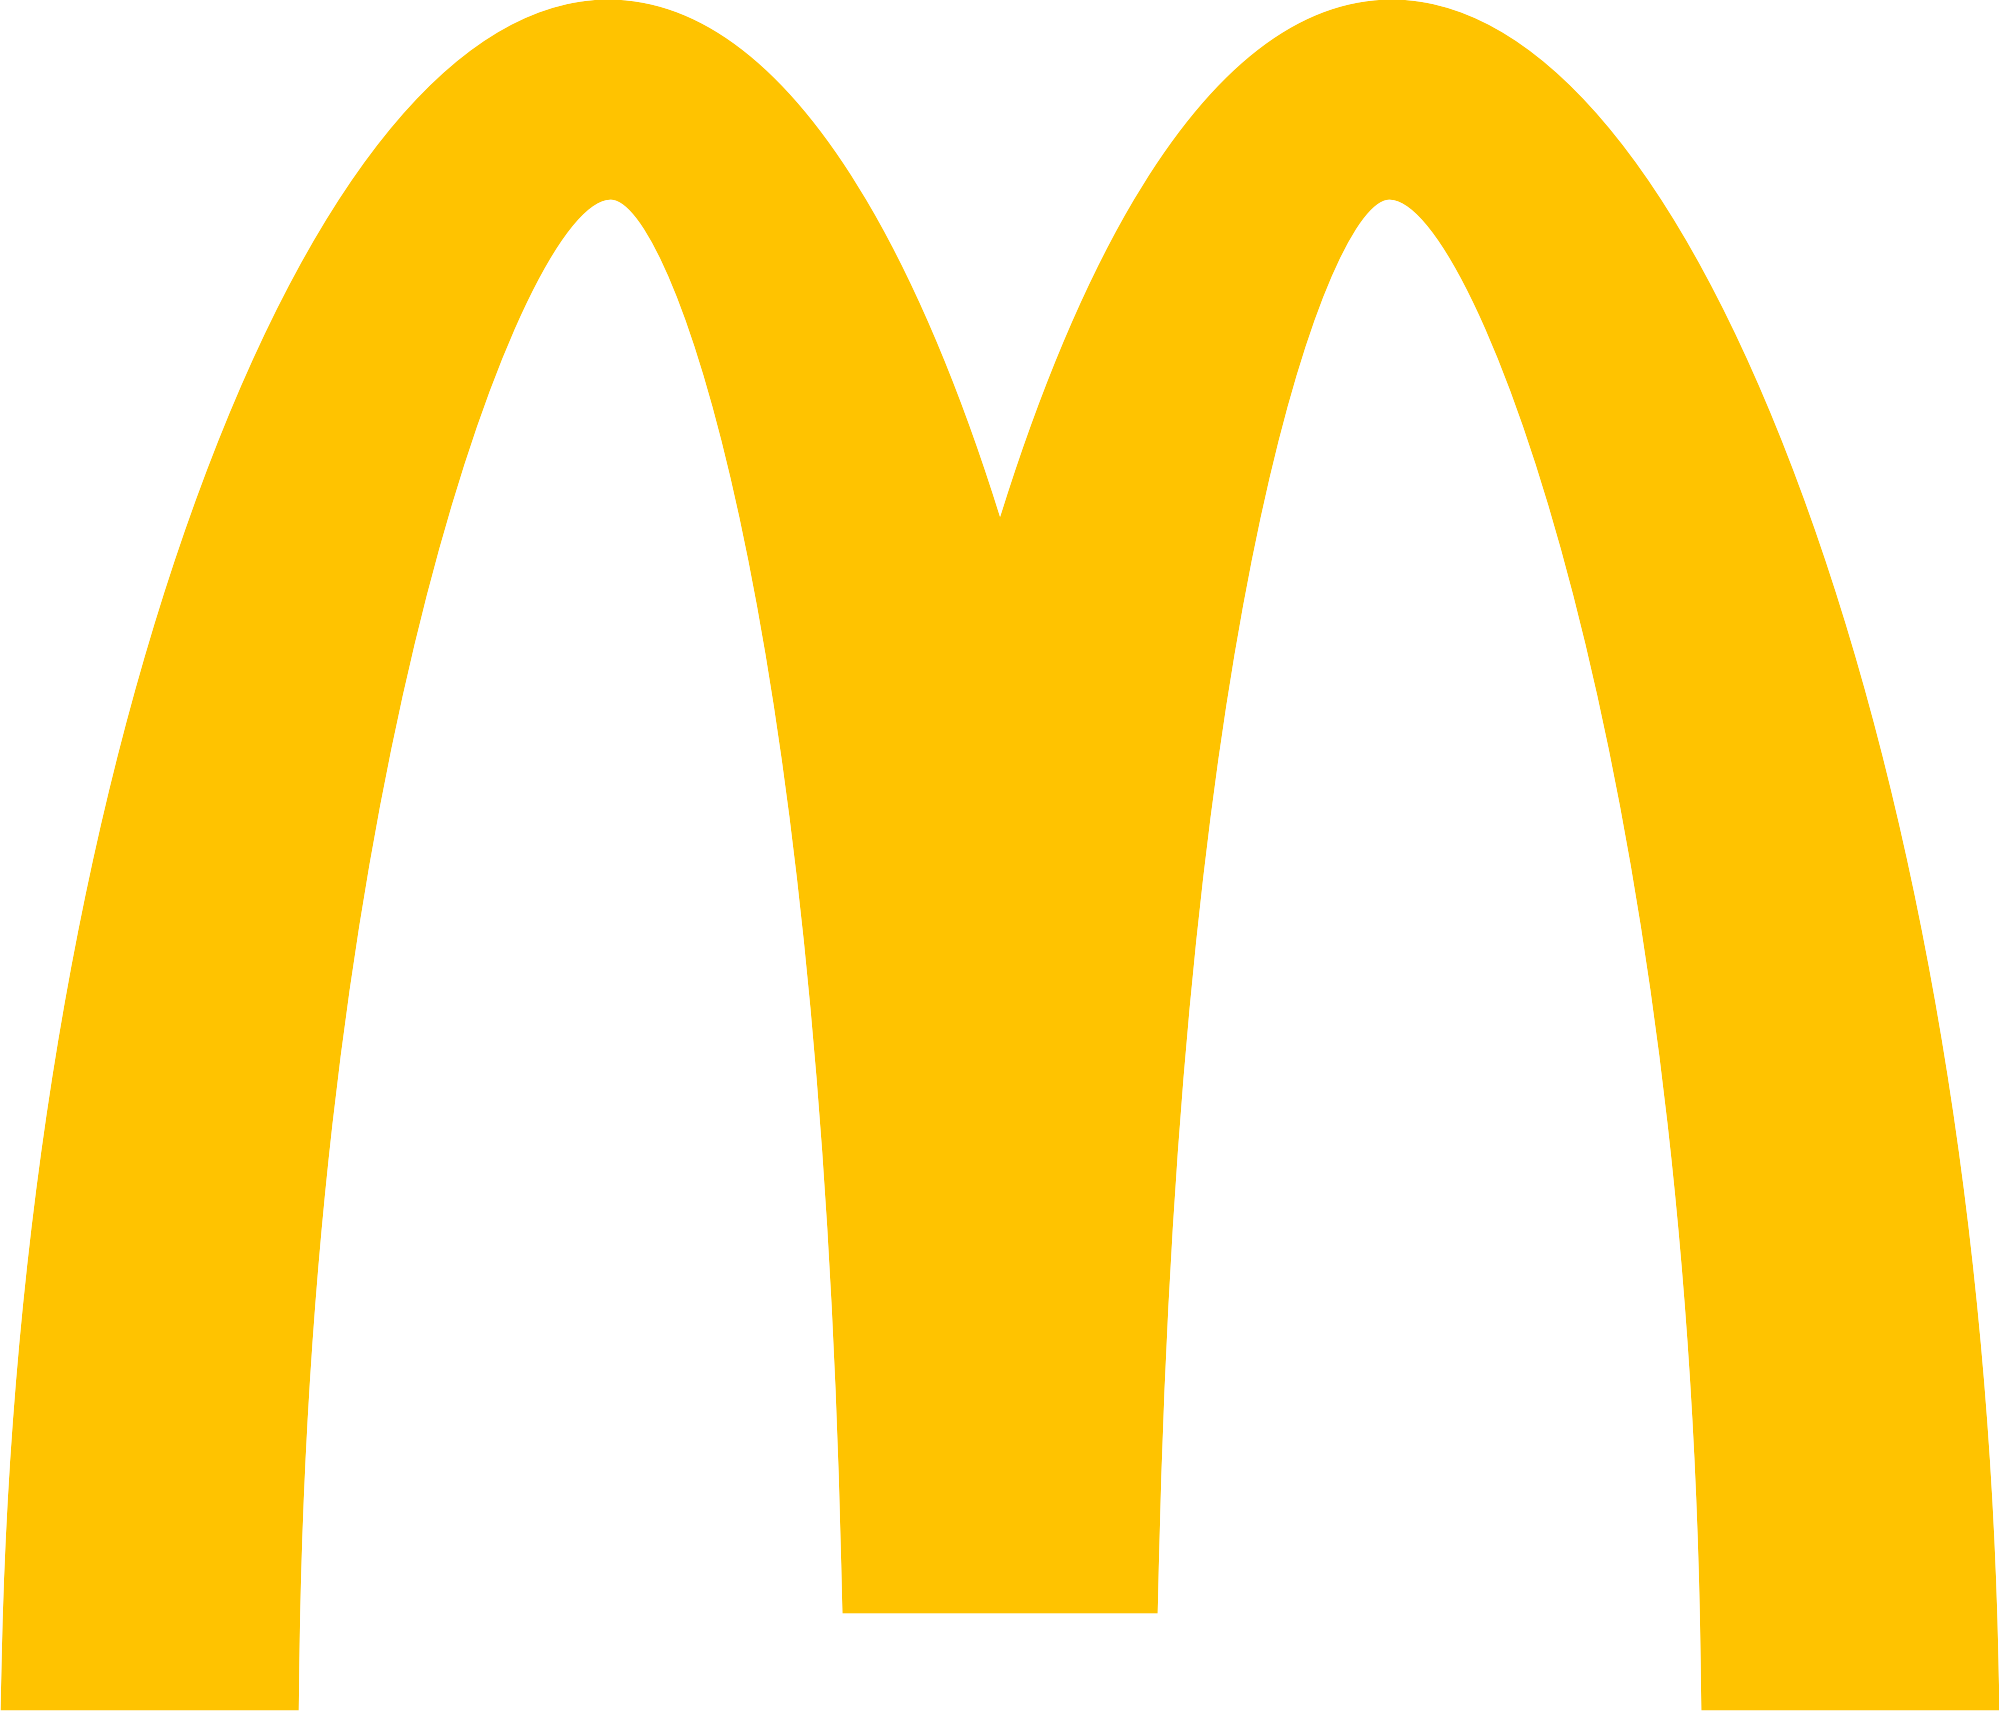 Mcdonalds Logo Transparent